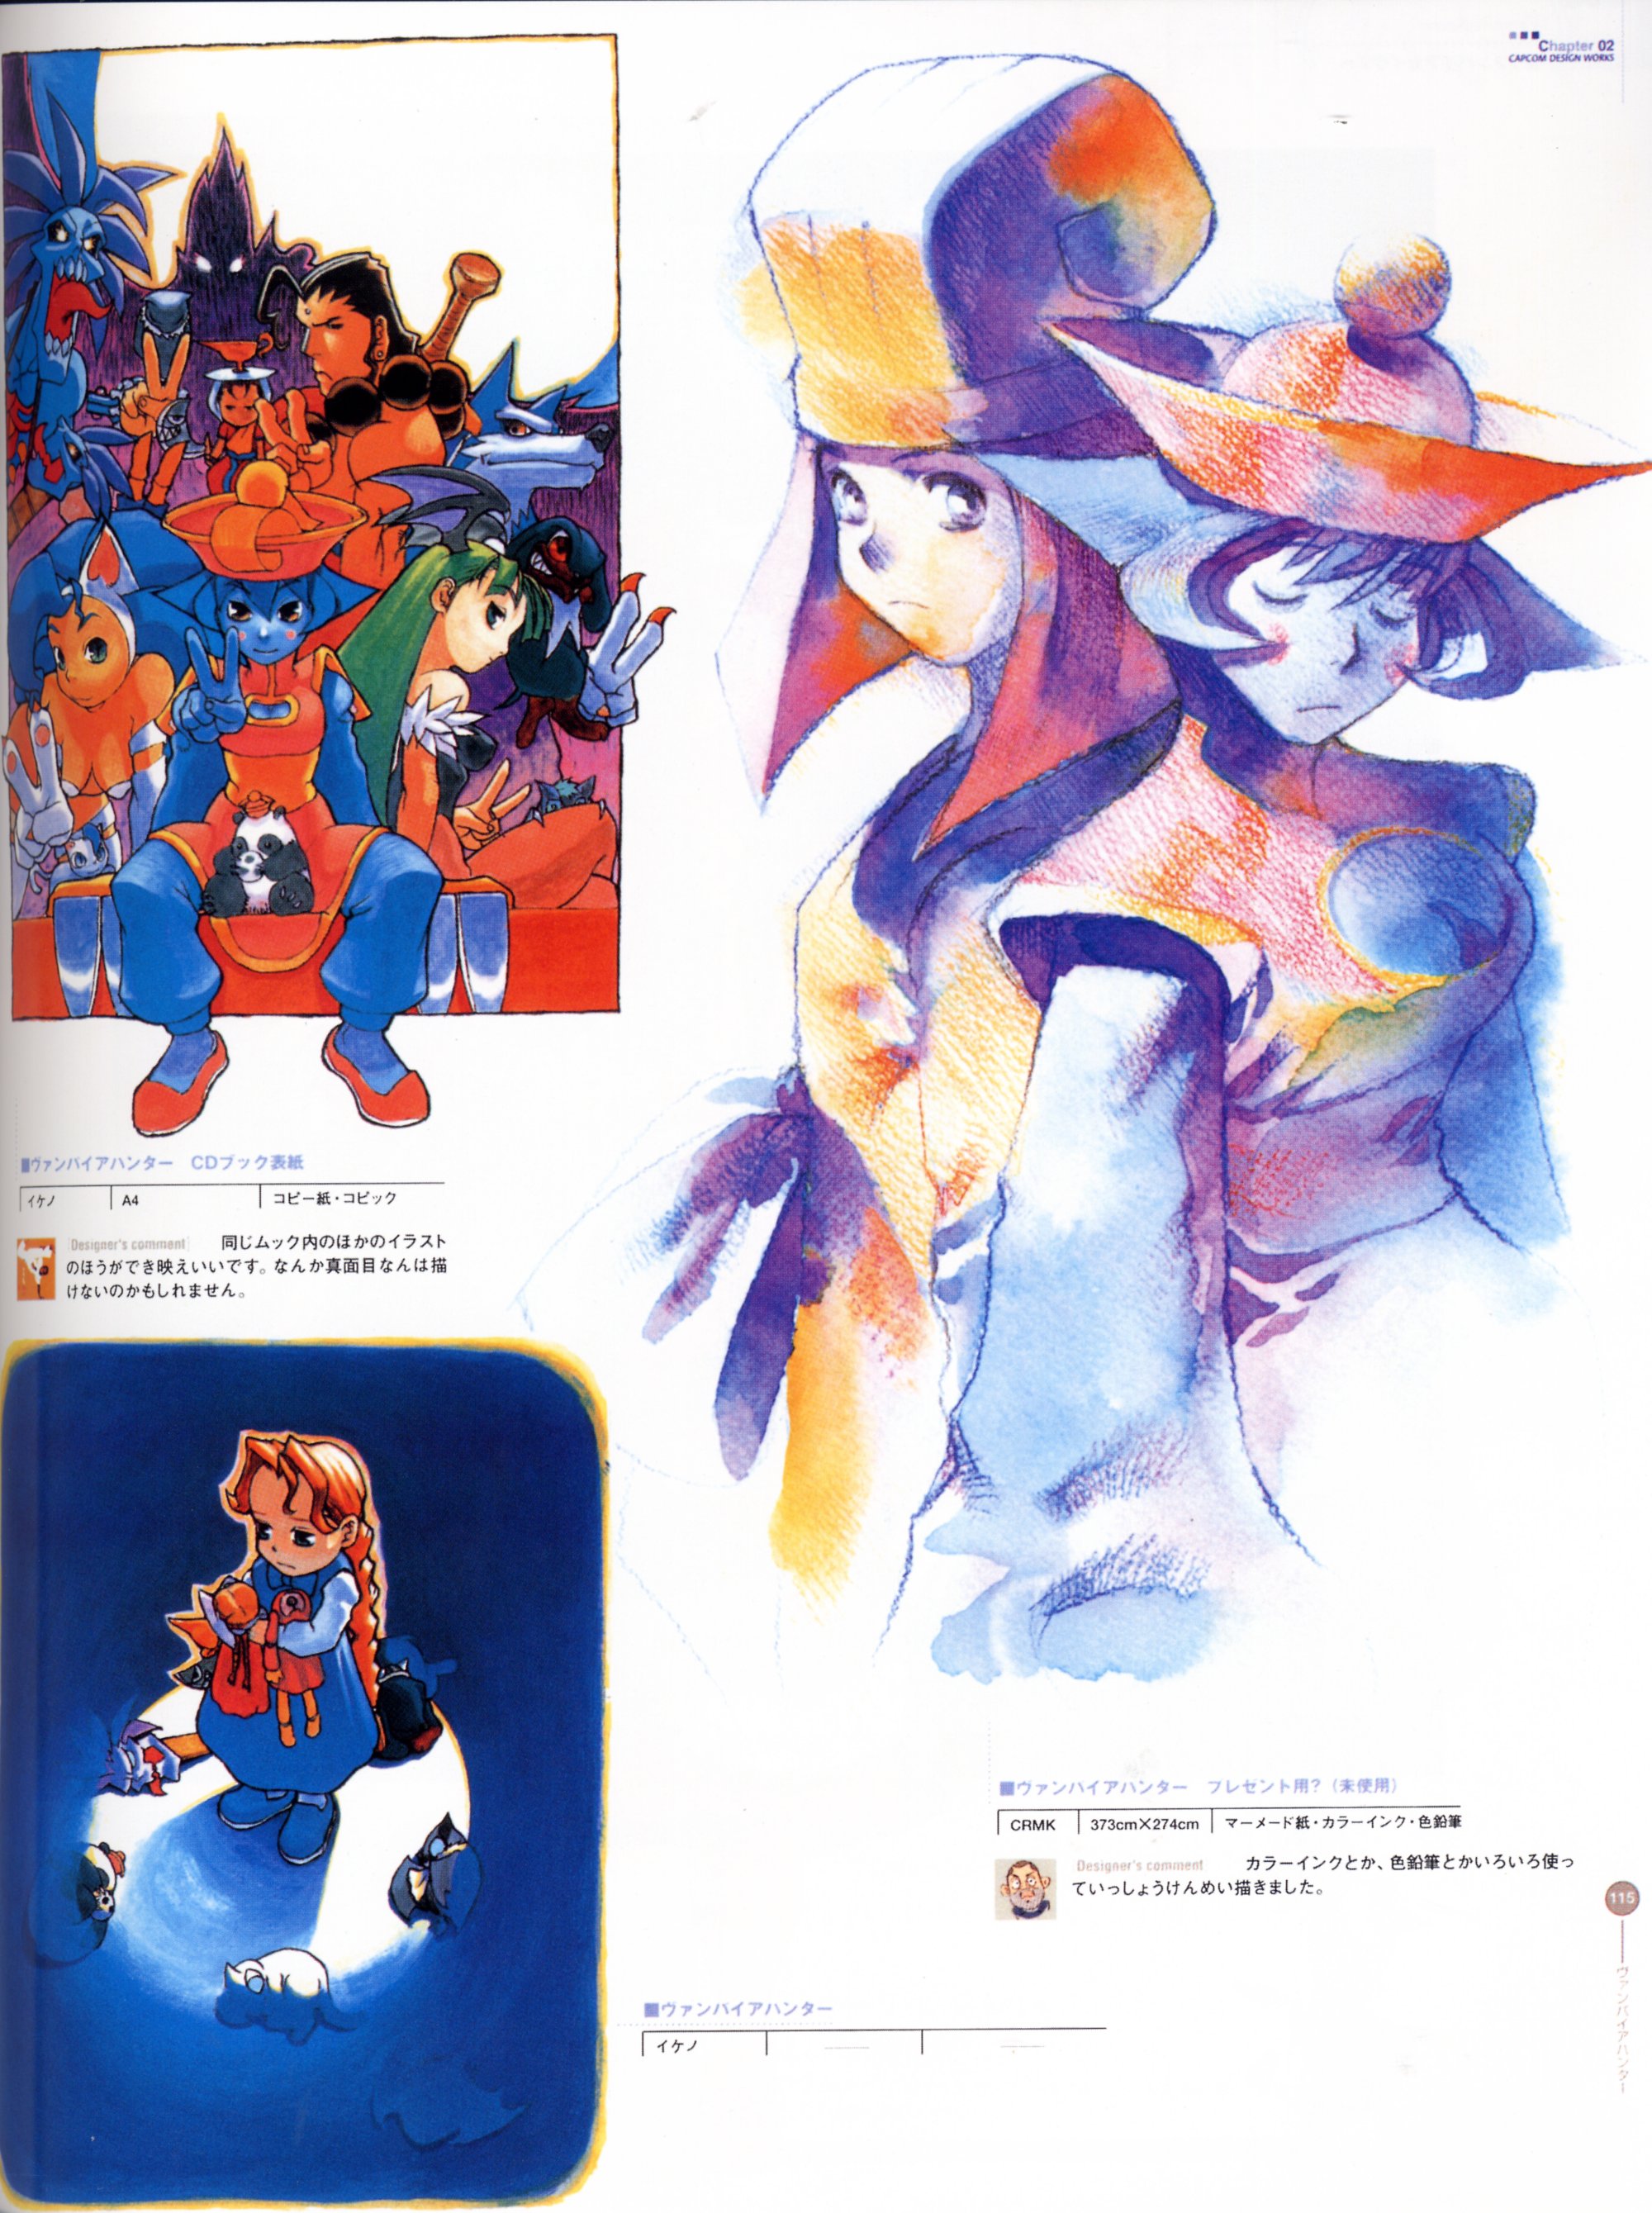 Capcom Design Works (243 works) » Page 8 » Pictures, artists